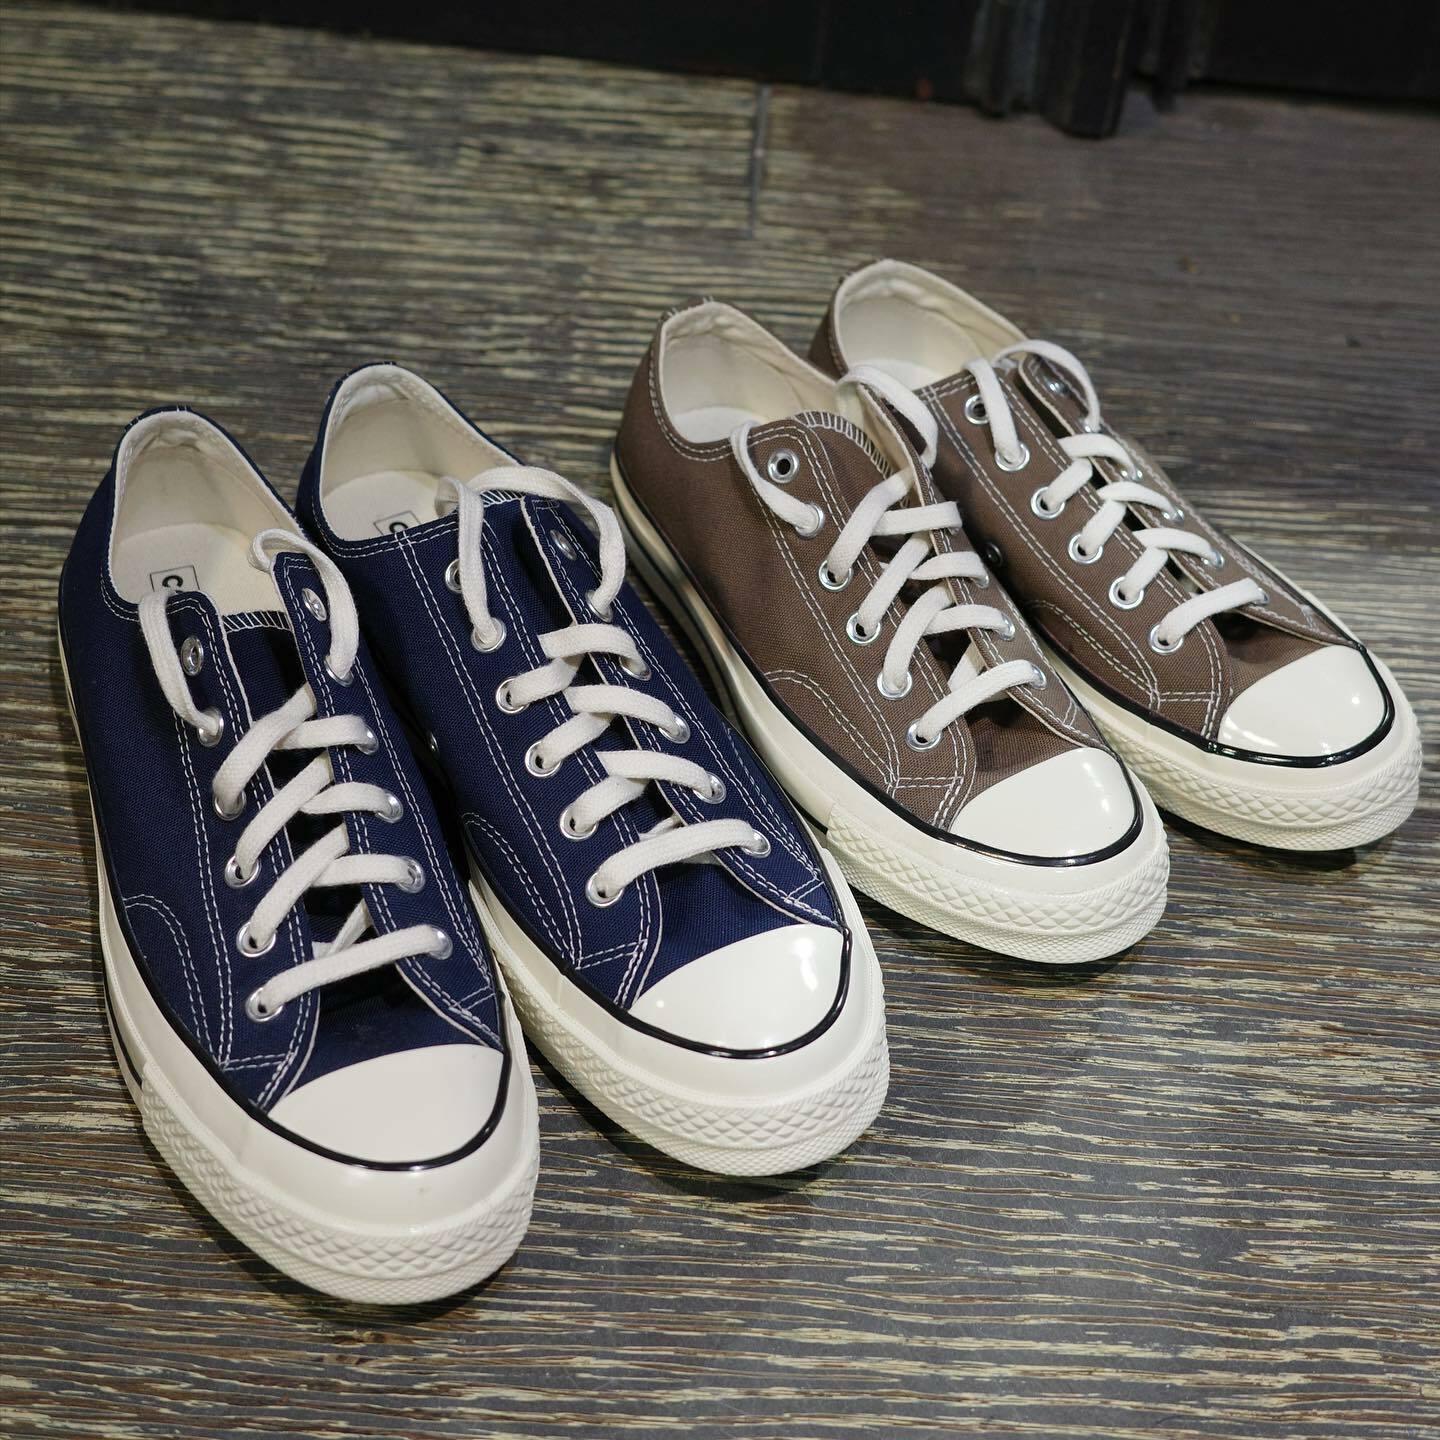 Converse 1970 午夜藍熊熊棕奶油底黑色三星標低筒帆布鞋(a02768c) 1726